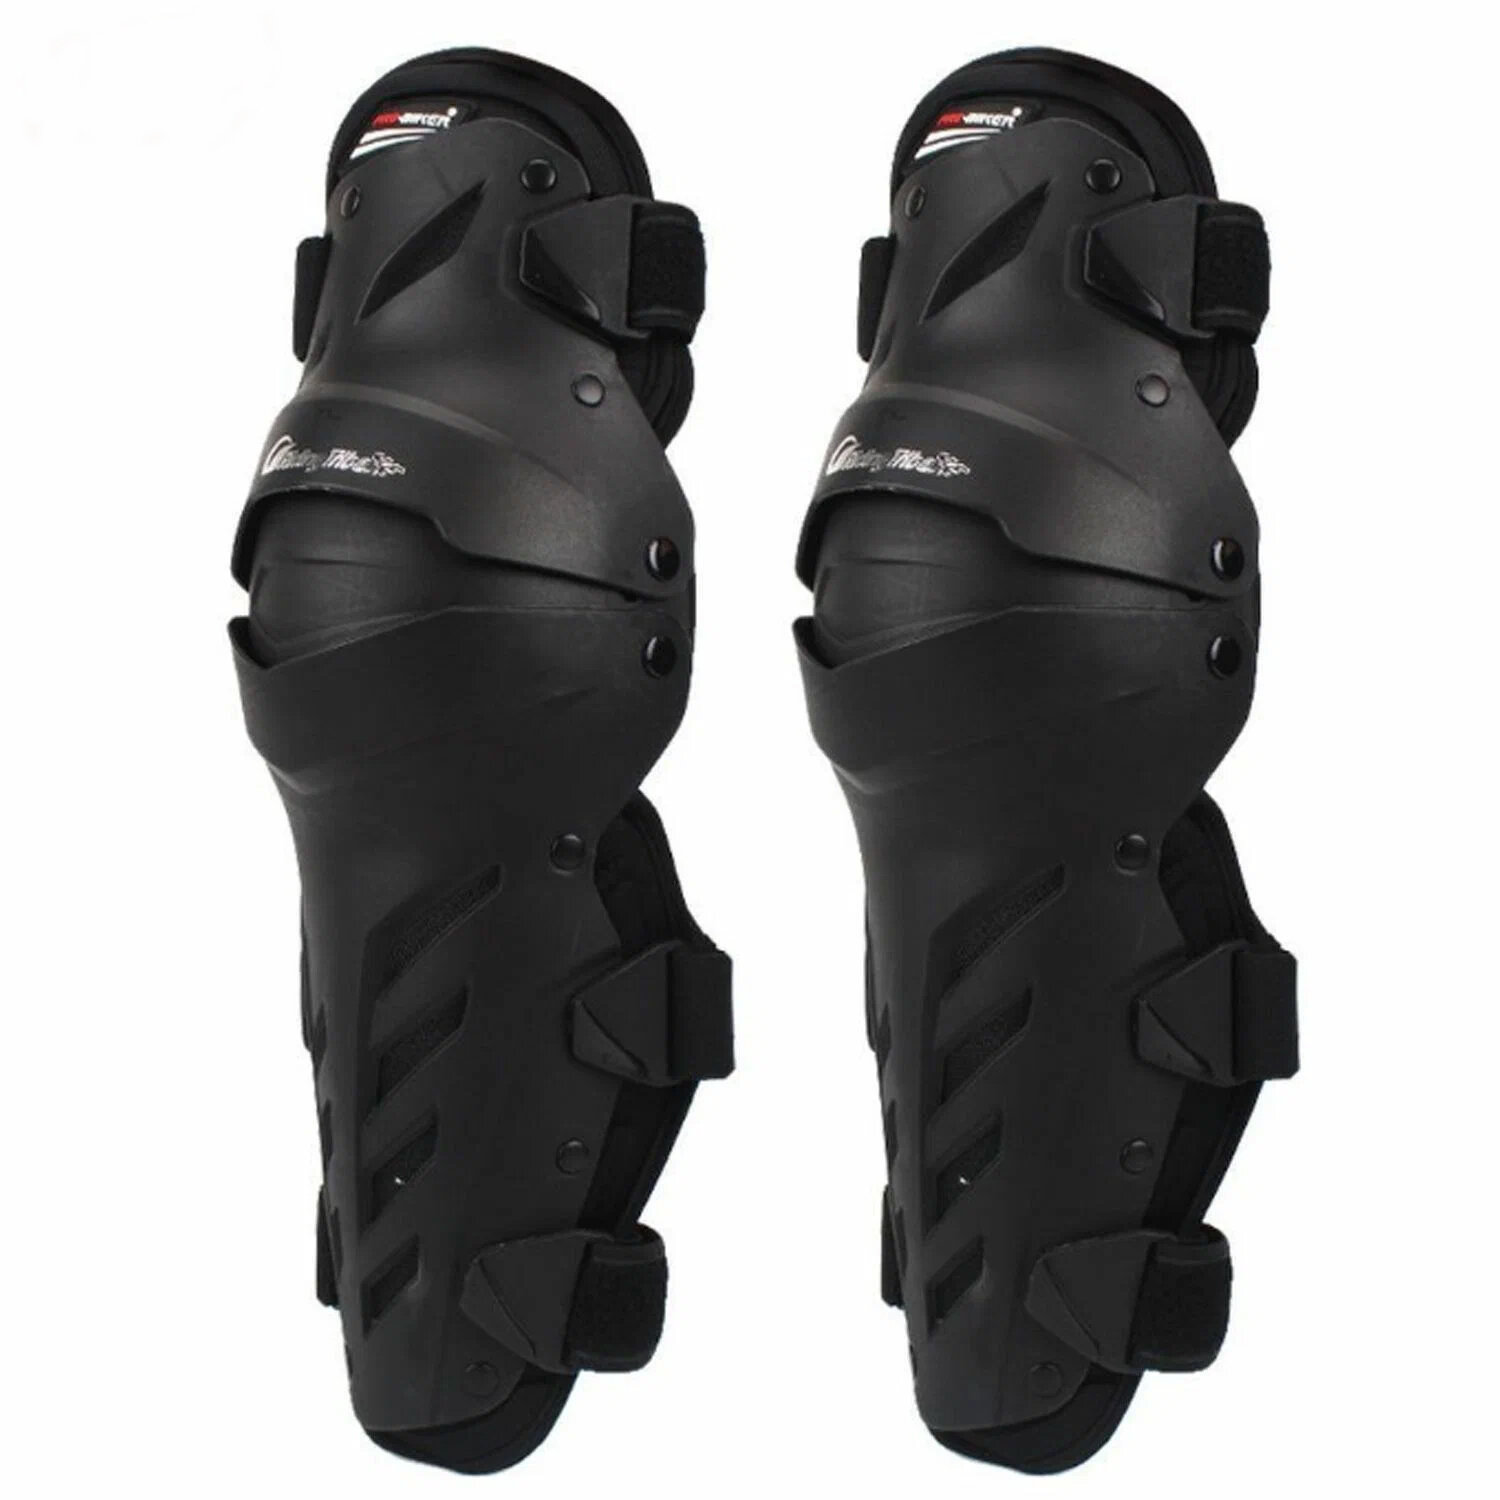 Щитки (наколенники) (черные) "Pro-Biker мотозащита колена